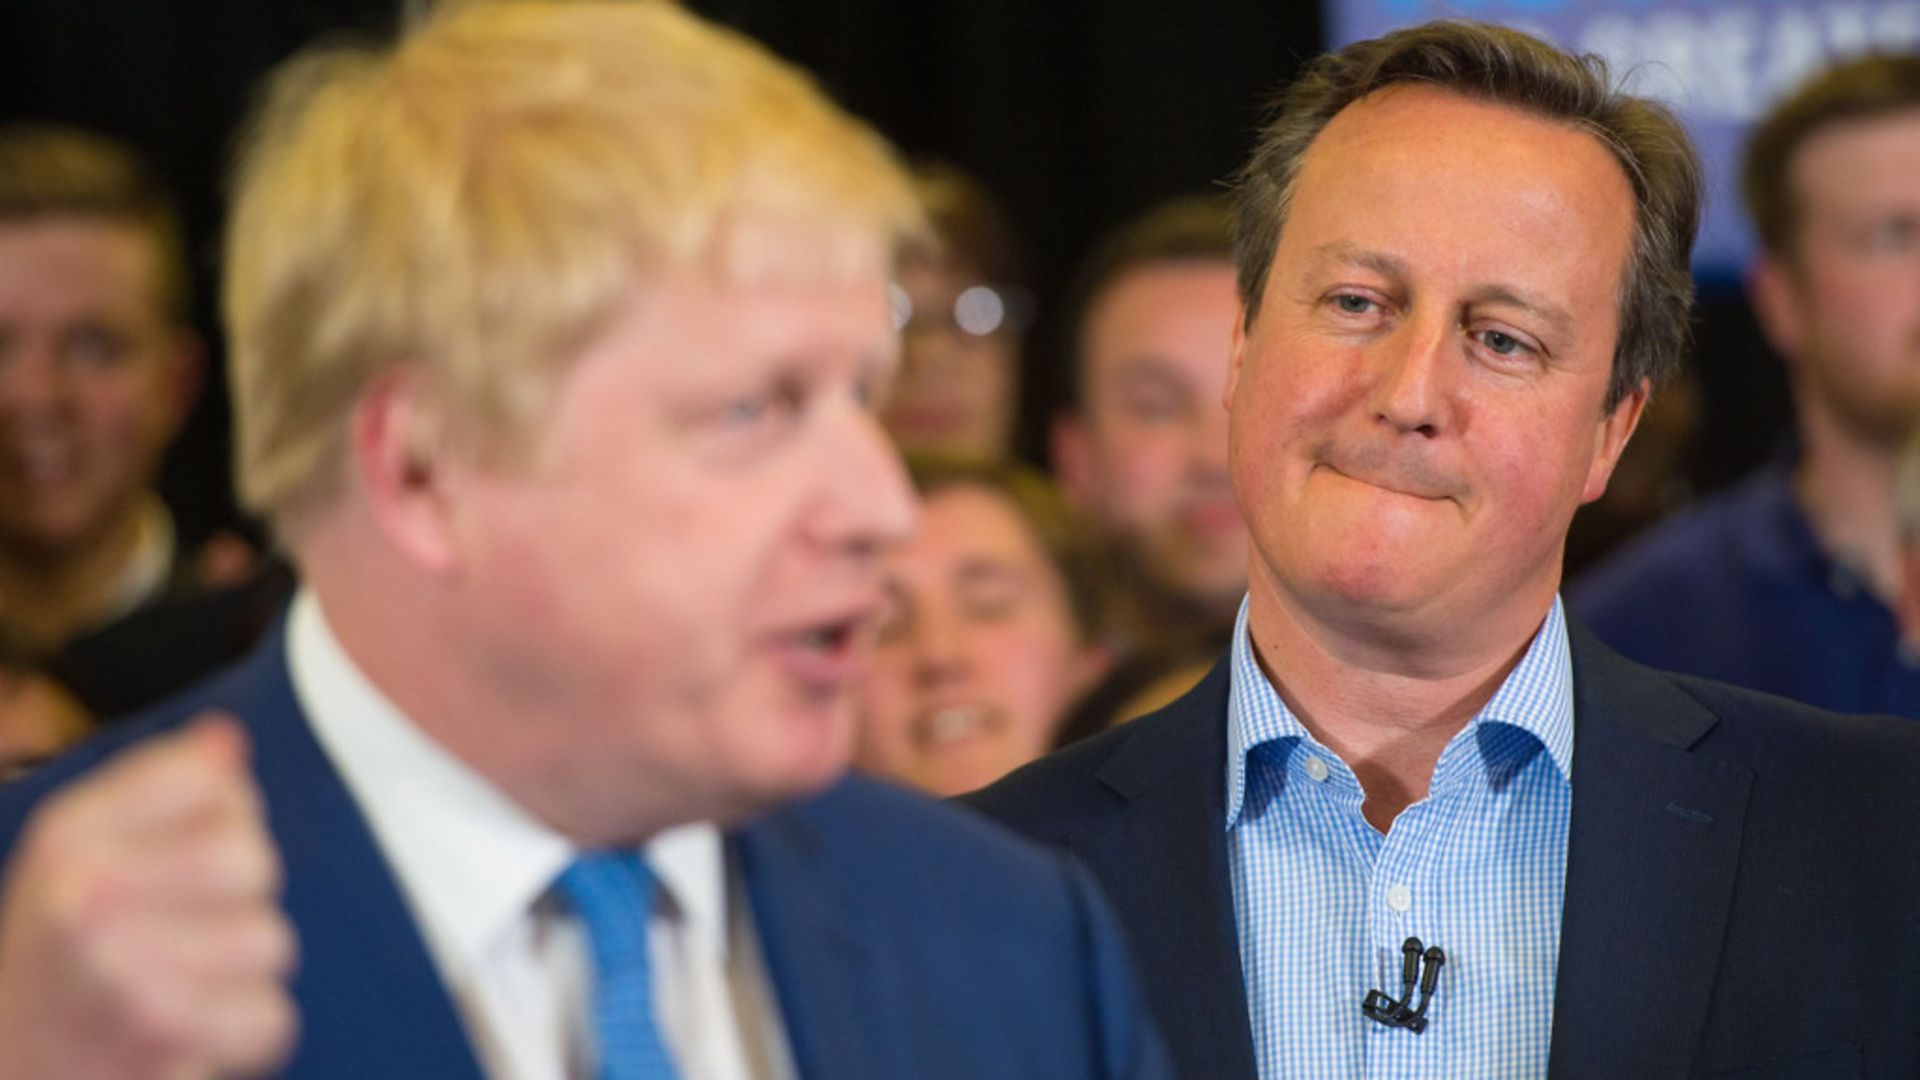 David Cameron watches Boris Johnson at a Tory party event - Credit: PA